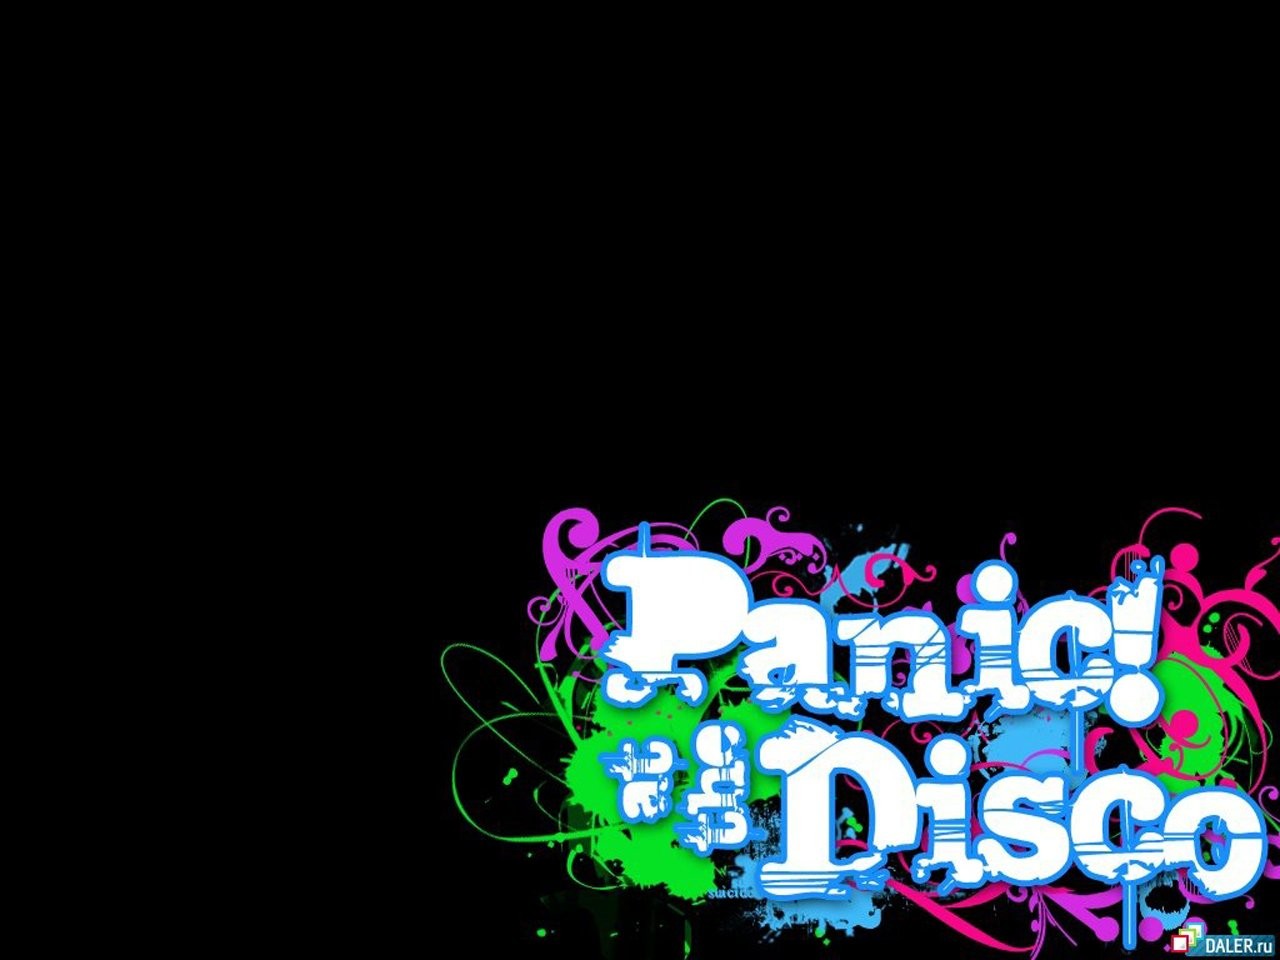 General 1280x960 black background music disco simple background digital art typography